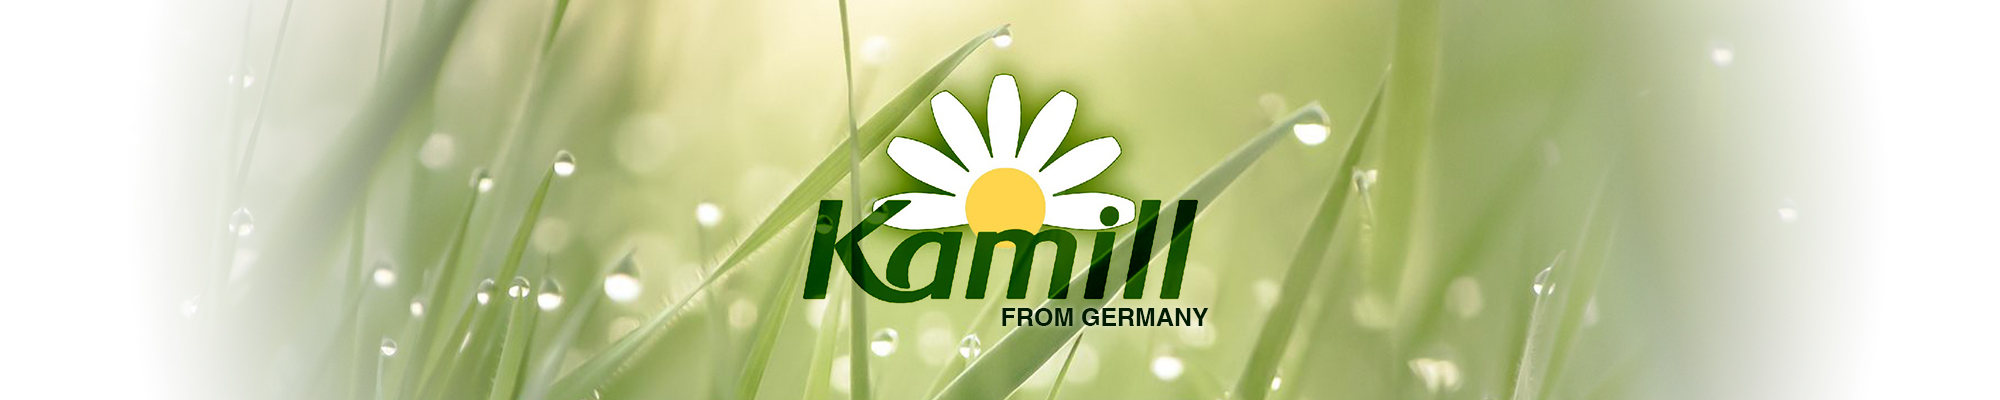 Kamill-banner